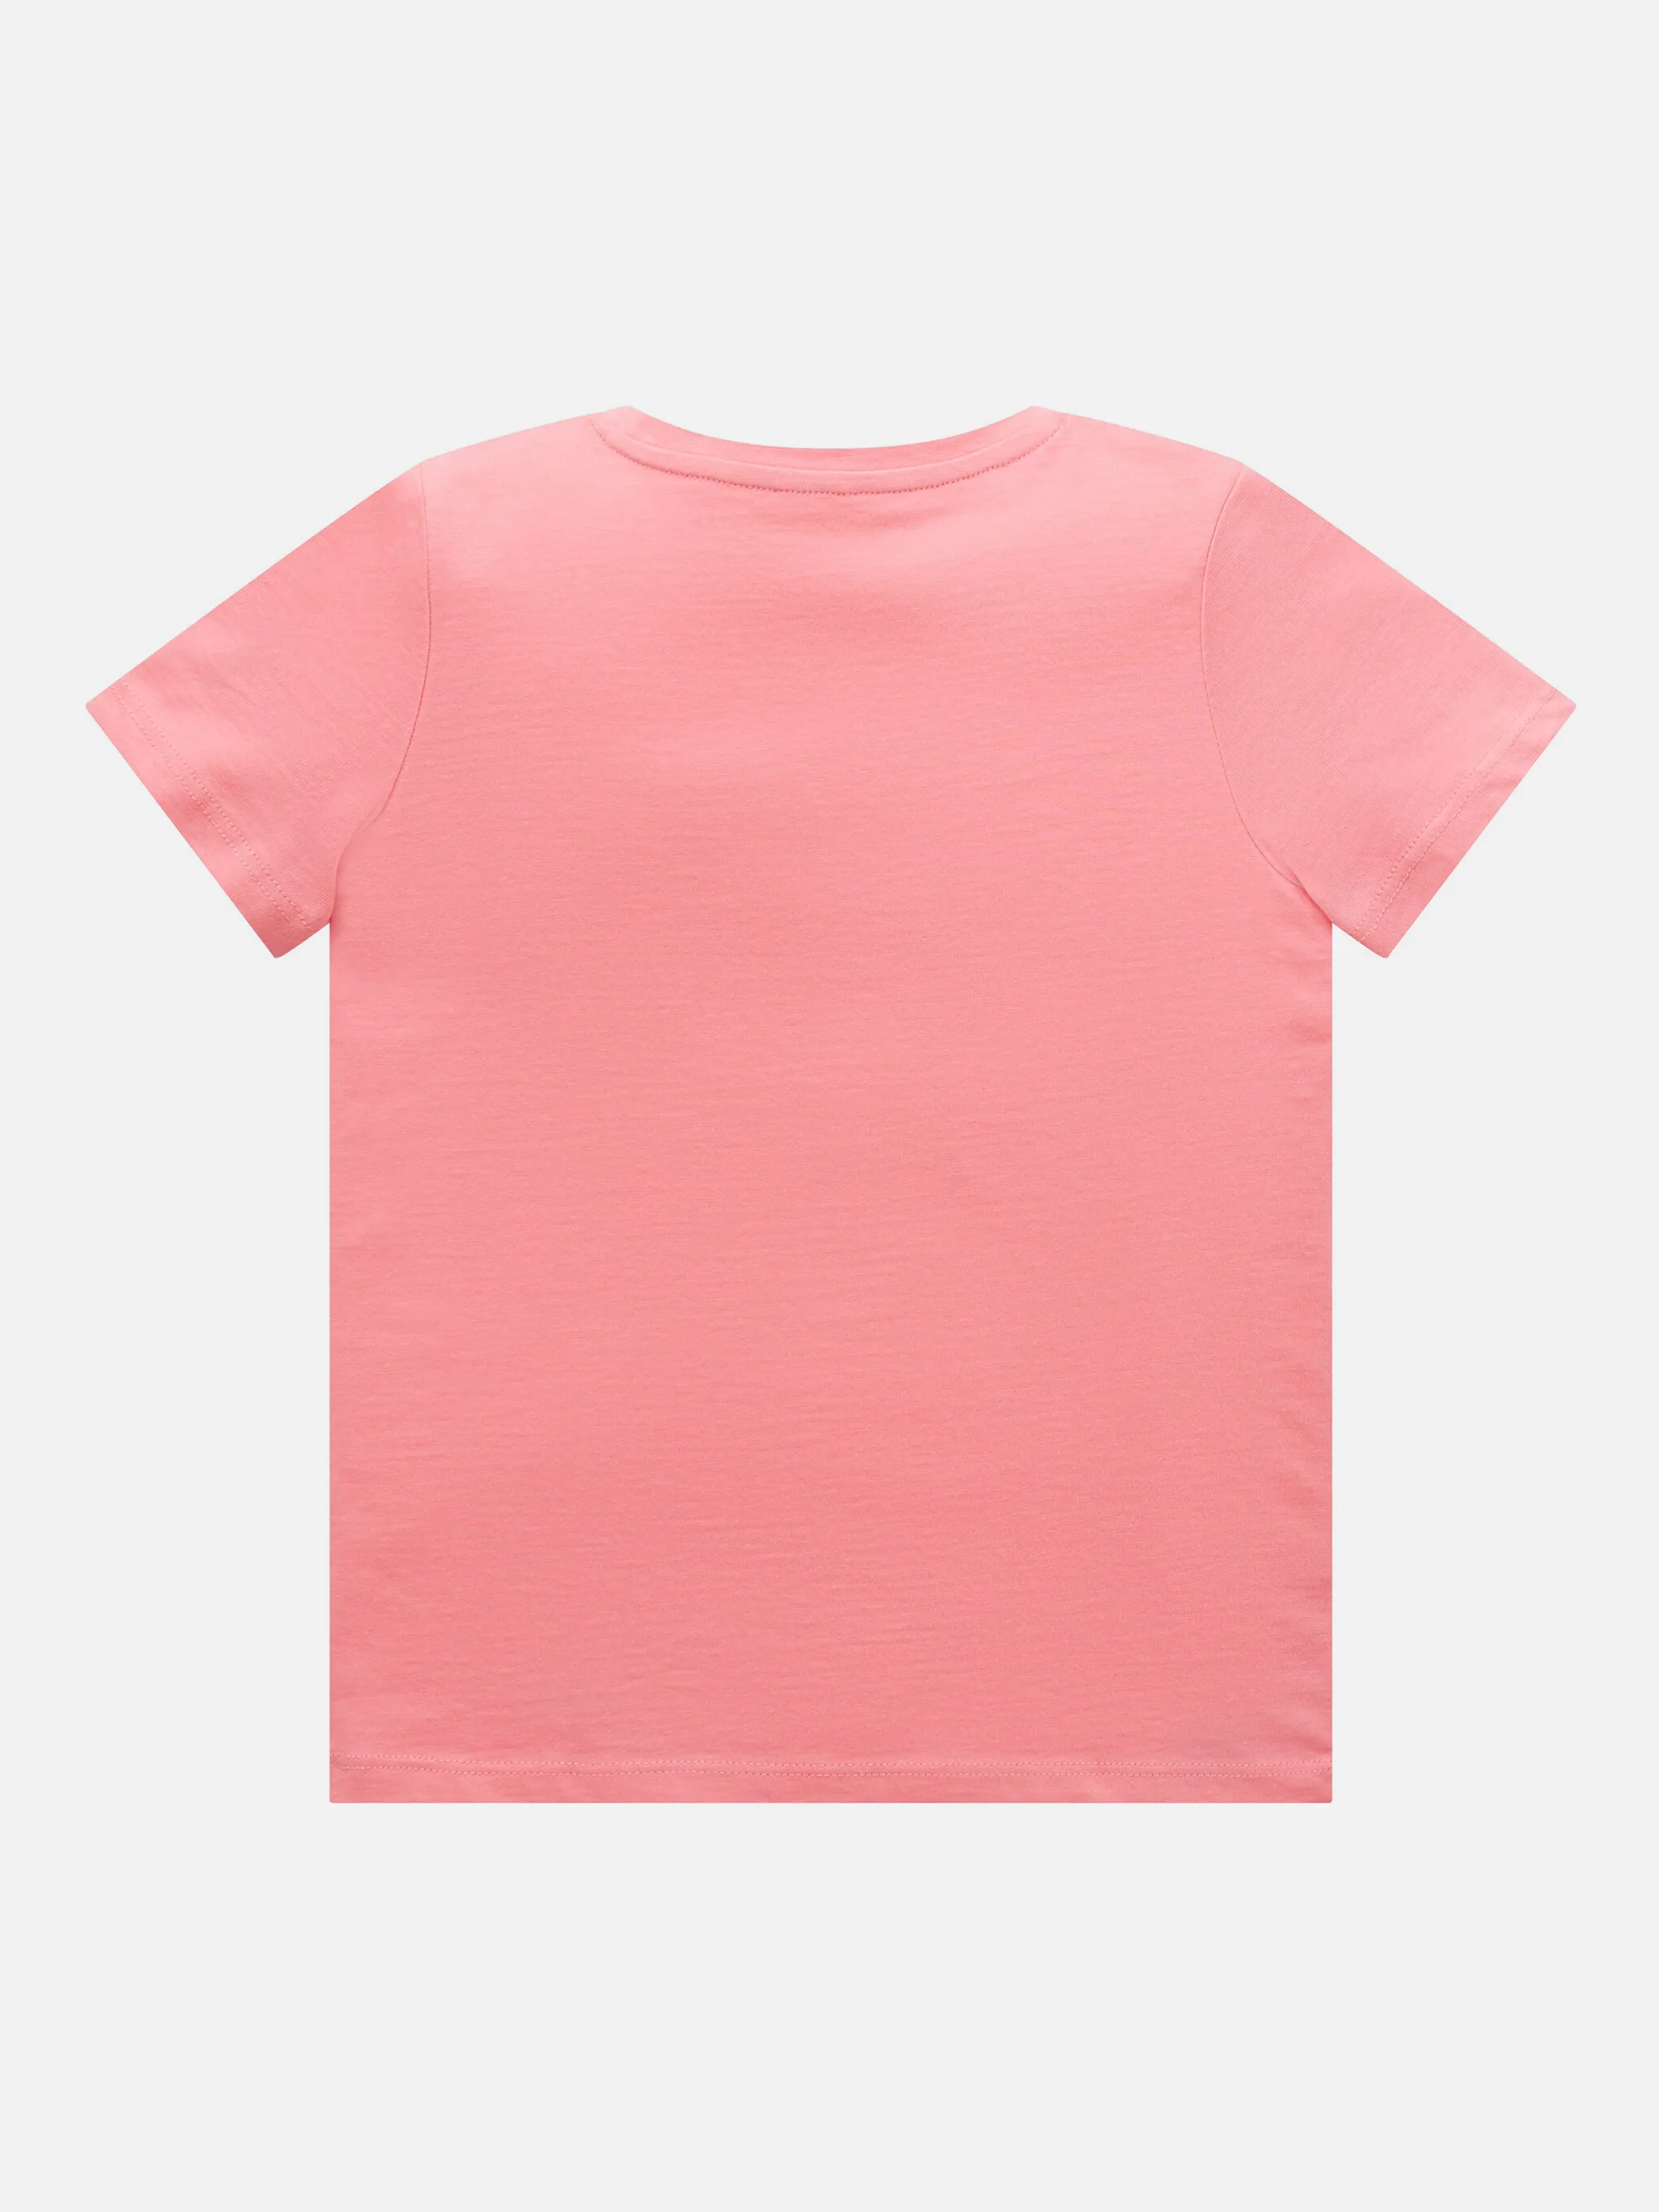 Tom Tailor 1032180 printed t-shirt Pink 865873 23807 2